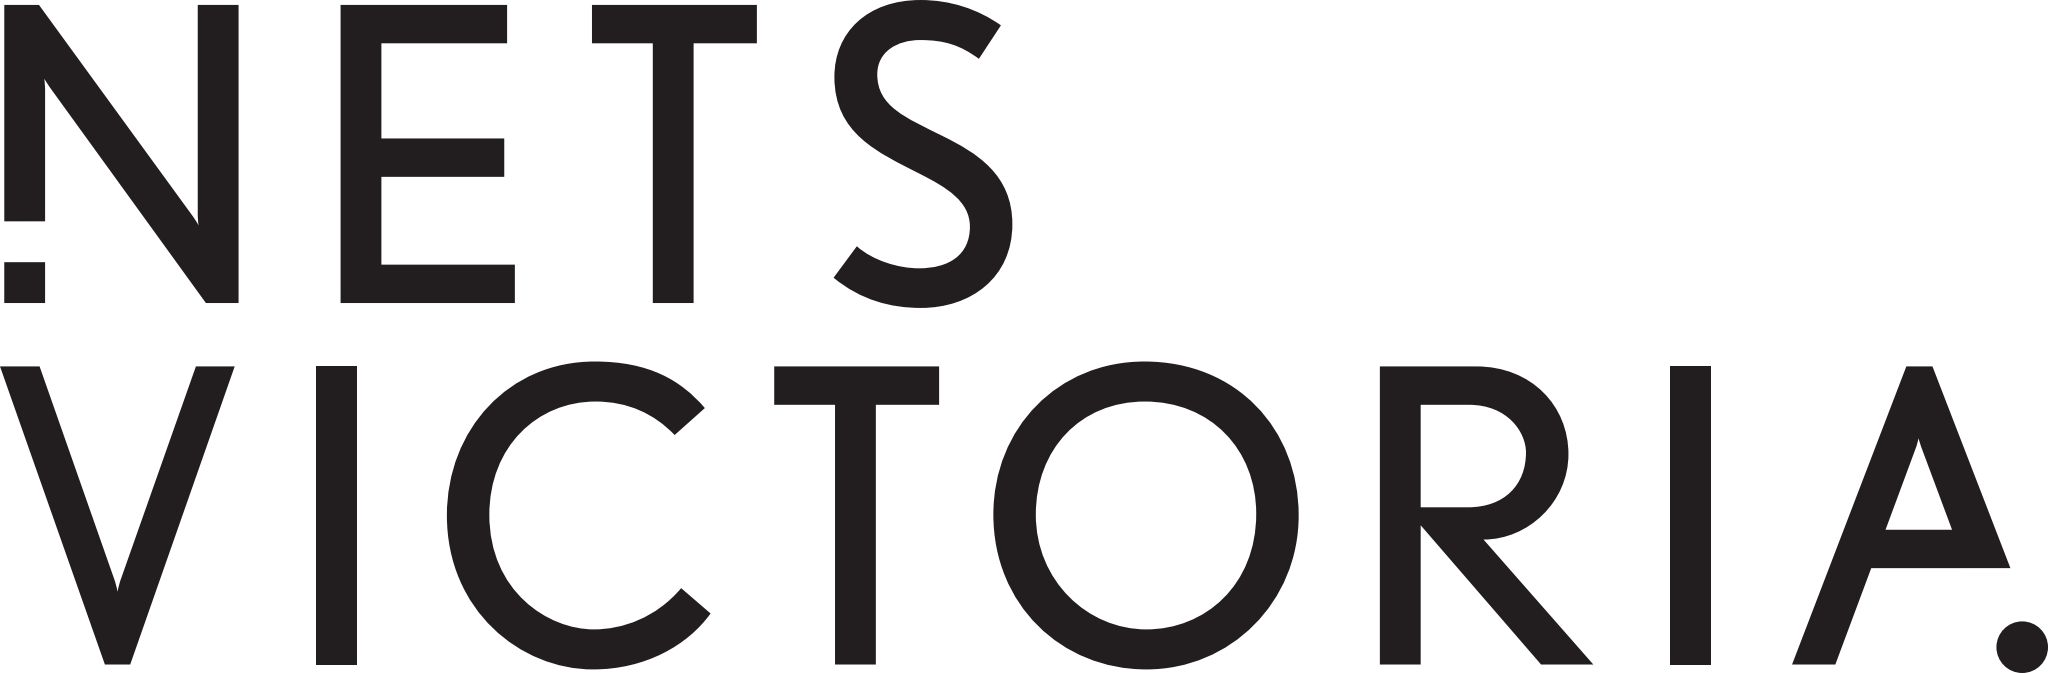 NETS Victoria logo